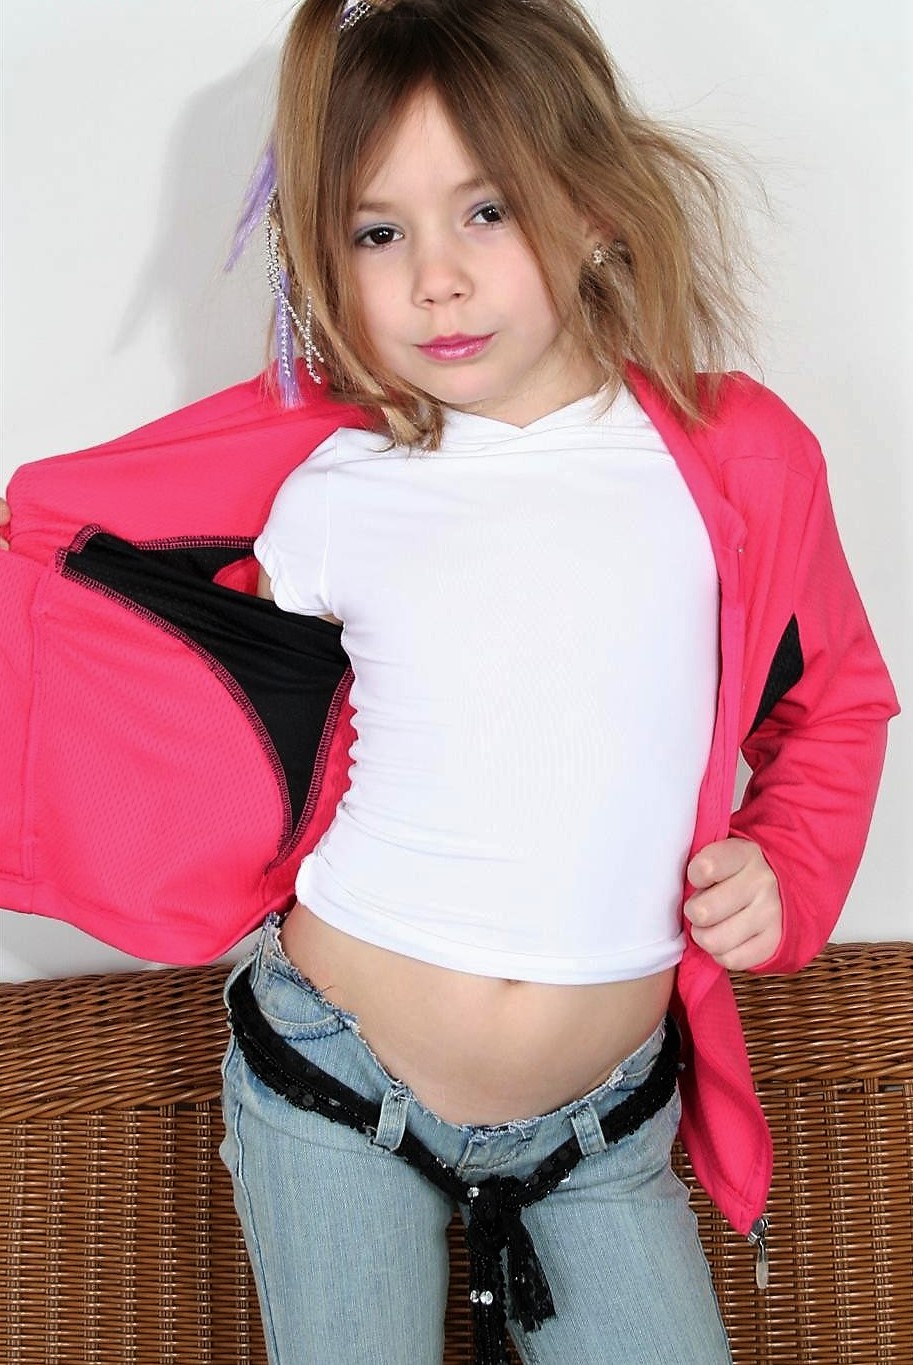 Miss Alli Rocker Babe Jeans Imgsrc Ru